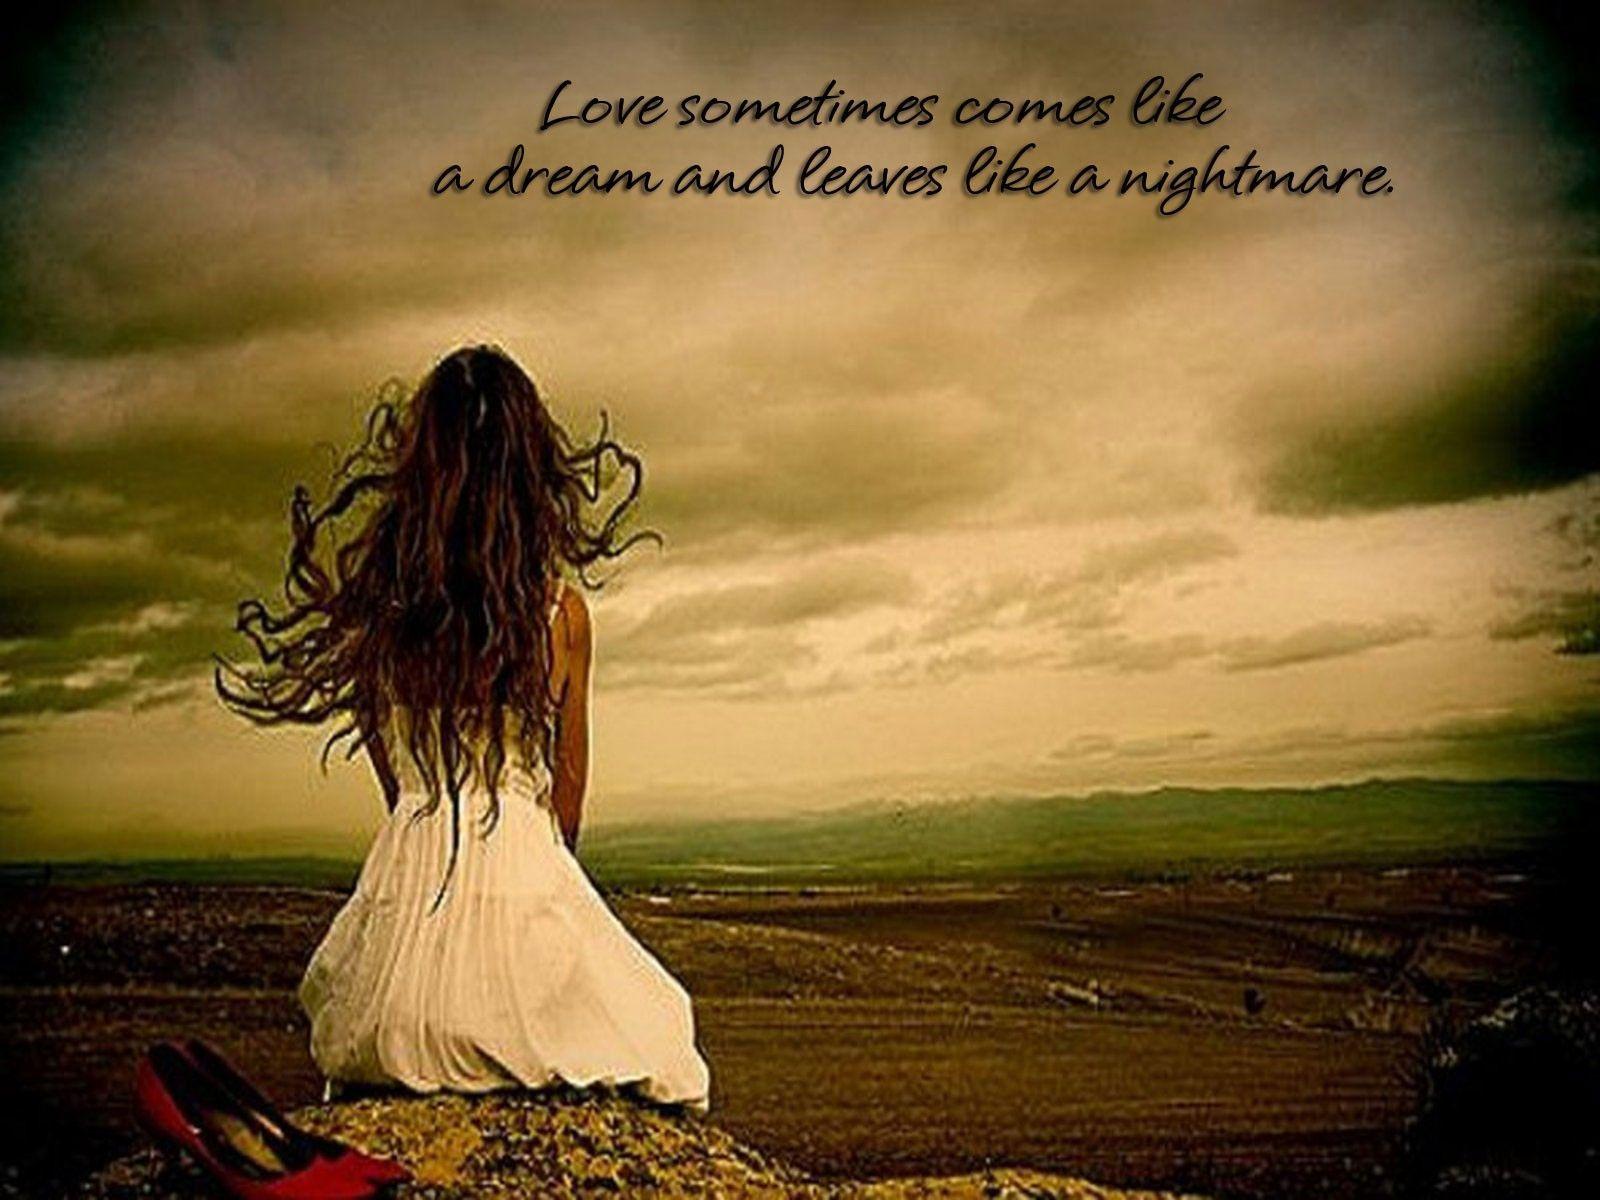 love sometimes comes like a dream and leaves like a nightmare. Yep